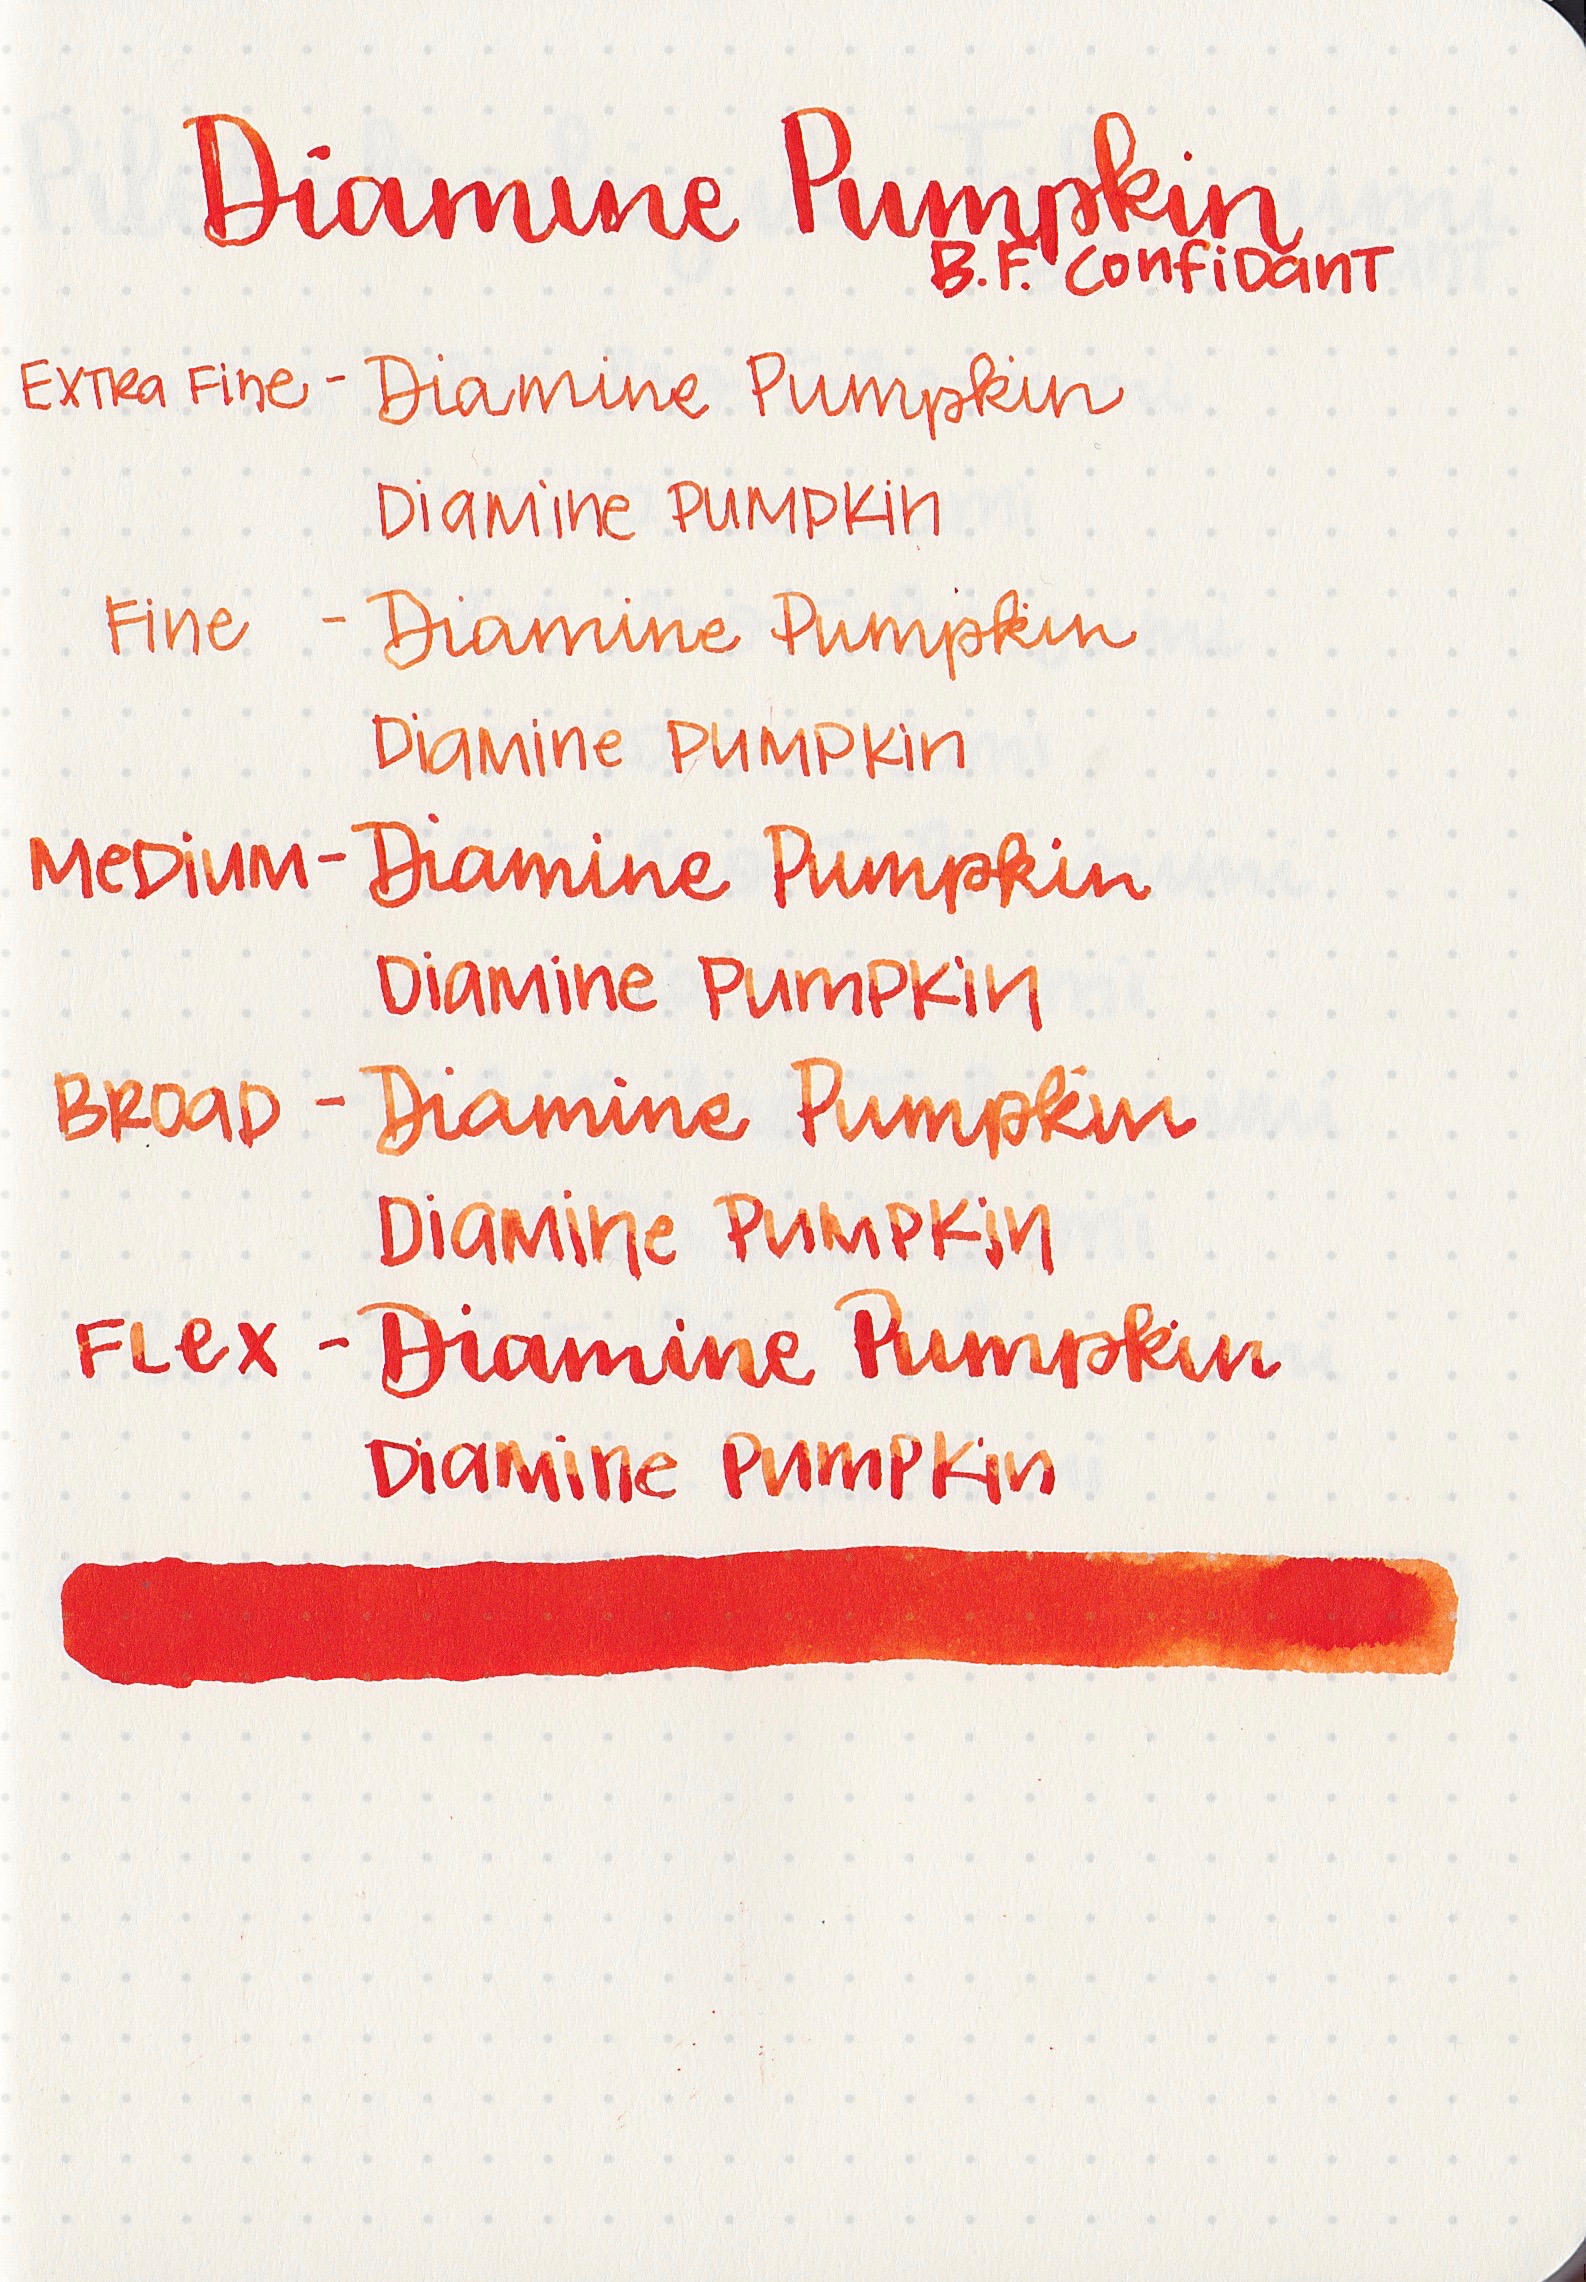 DPumpkin - 12.jpg